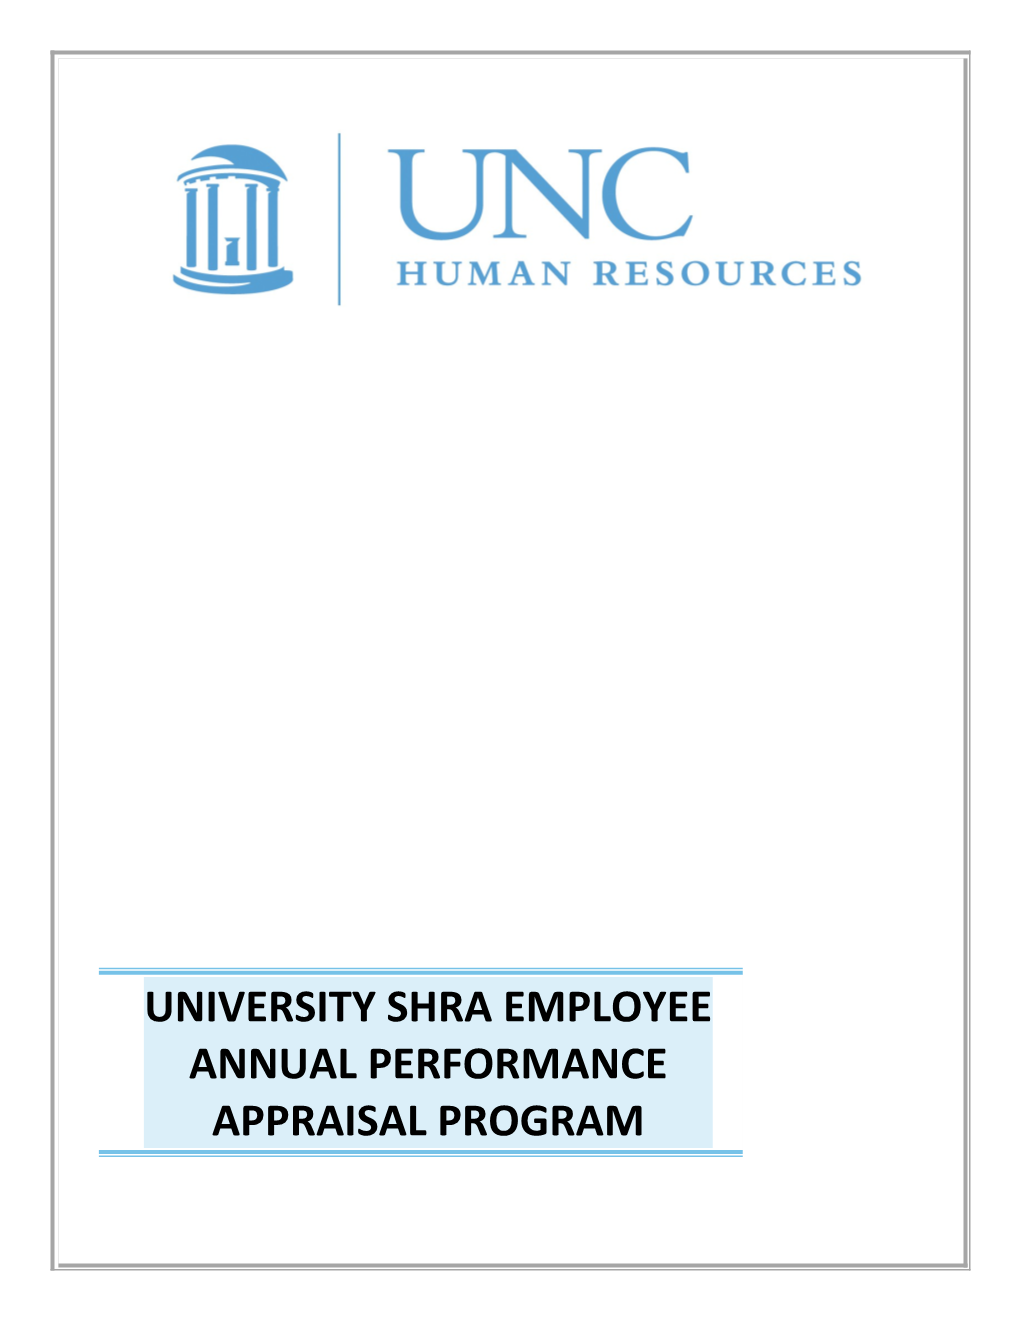 University Shra Employee Annual Performance Appraisal Program